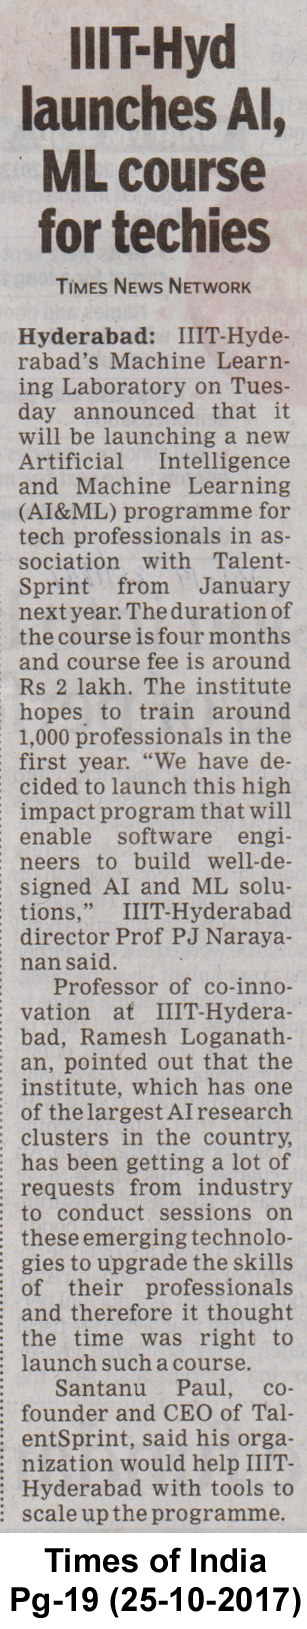 IIIT-Hyderabad launches AI programme